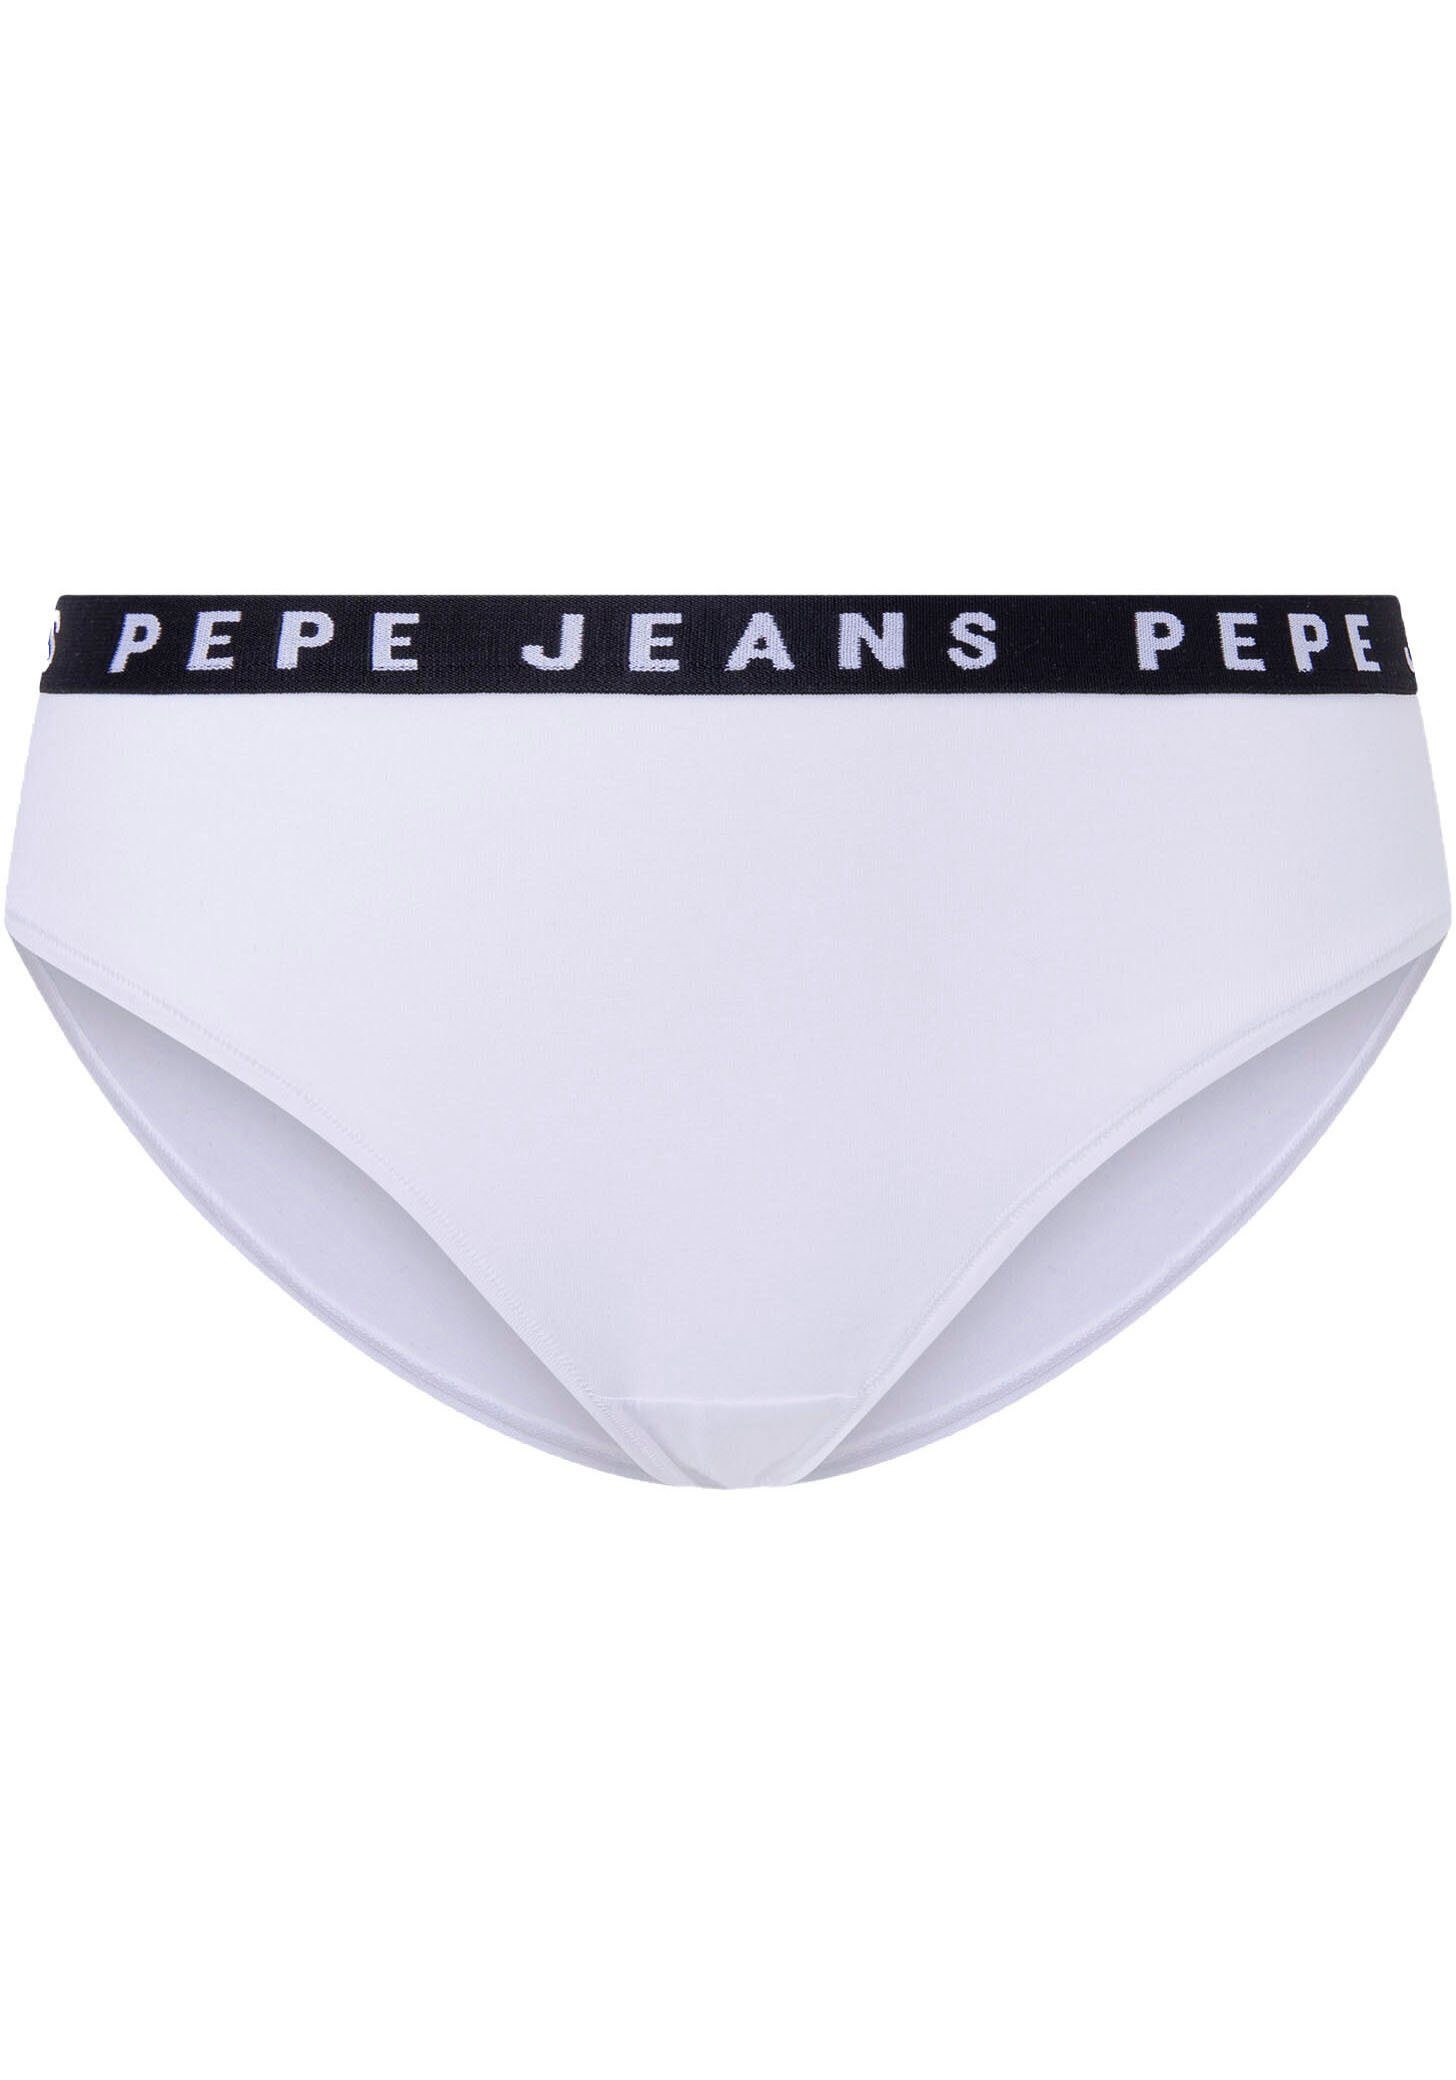 Pepe Jeans Slip white